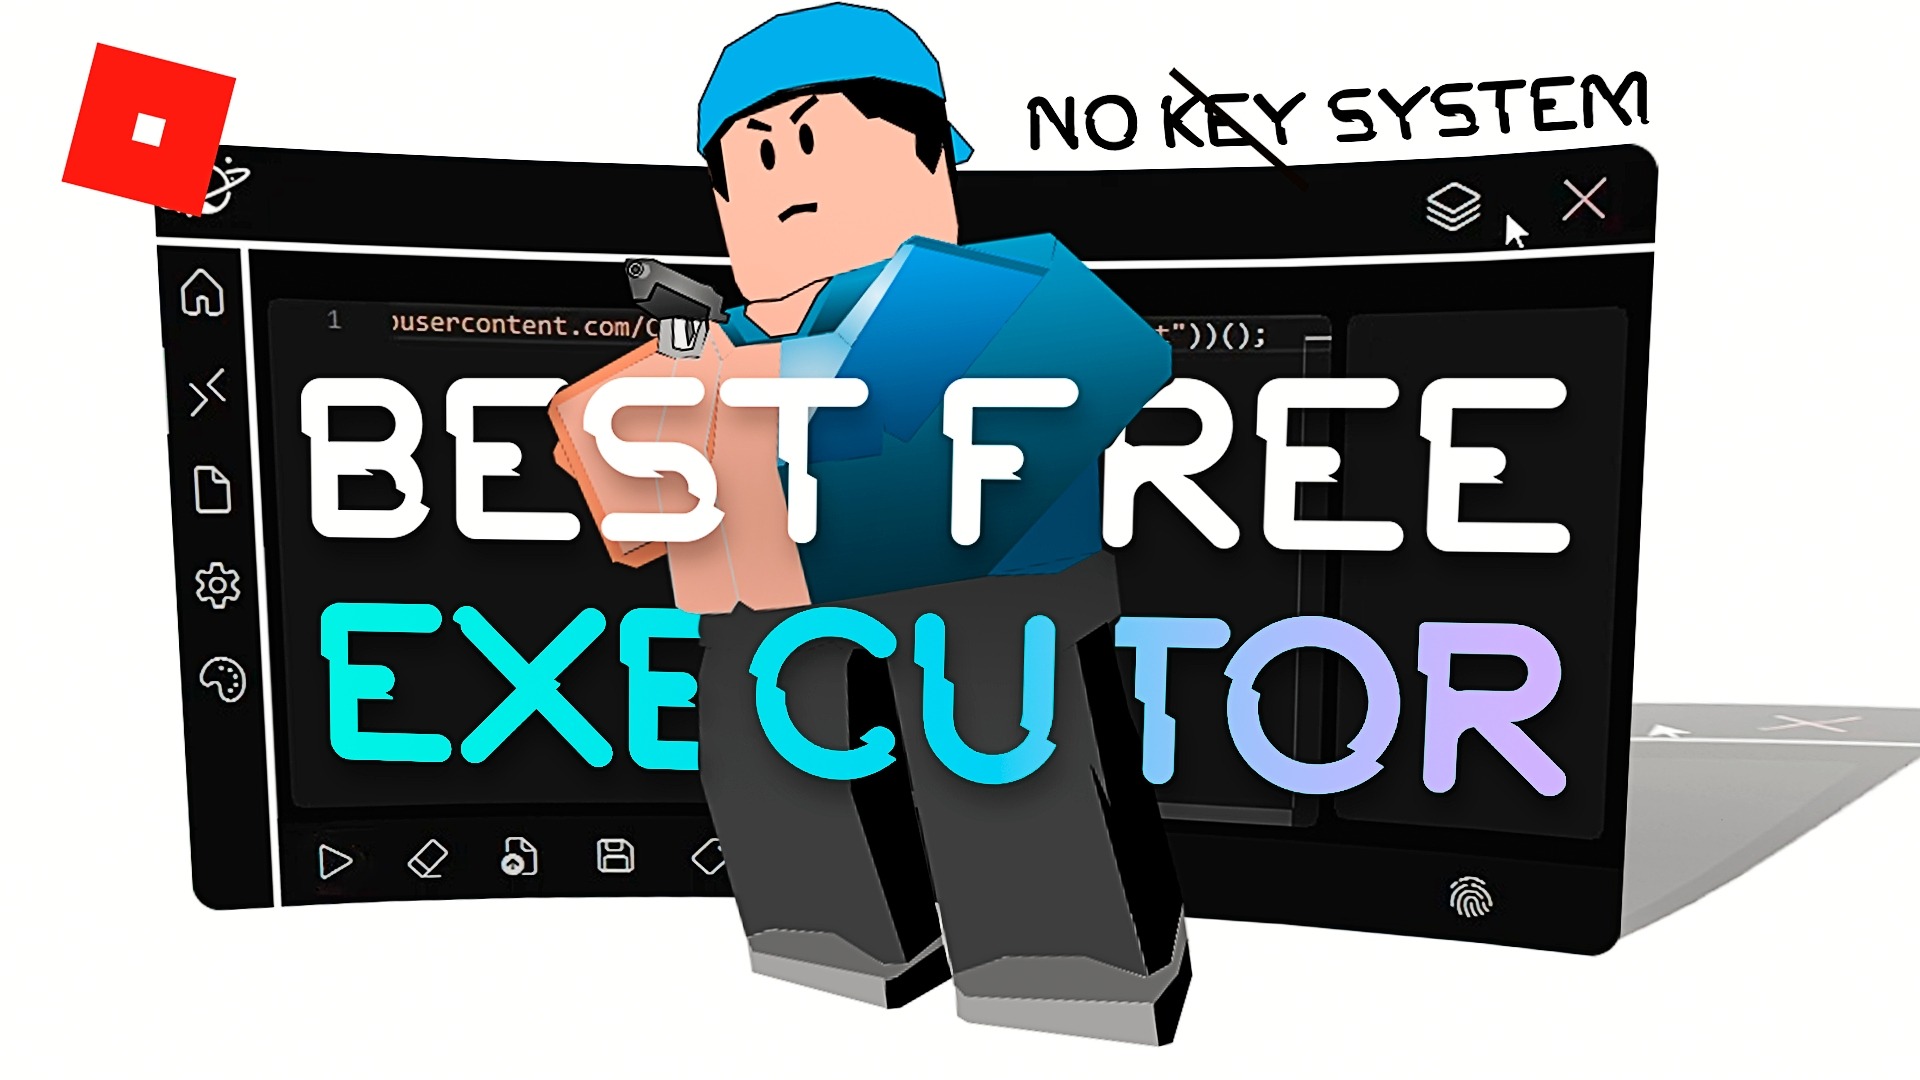 Free Script Executor by Nova - Free download on ToneDen